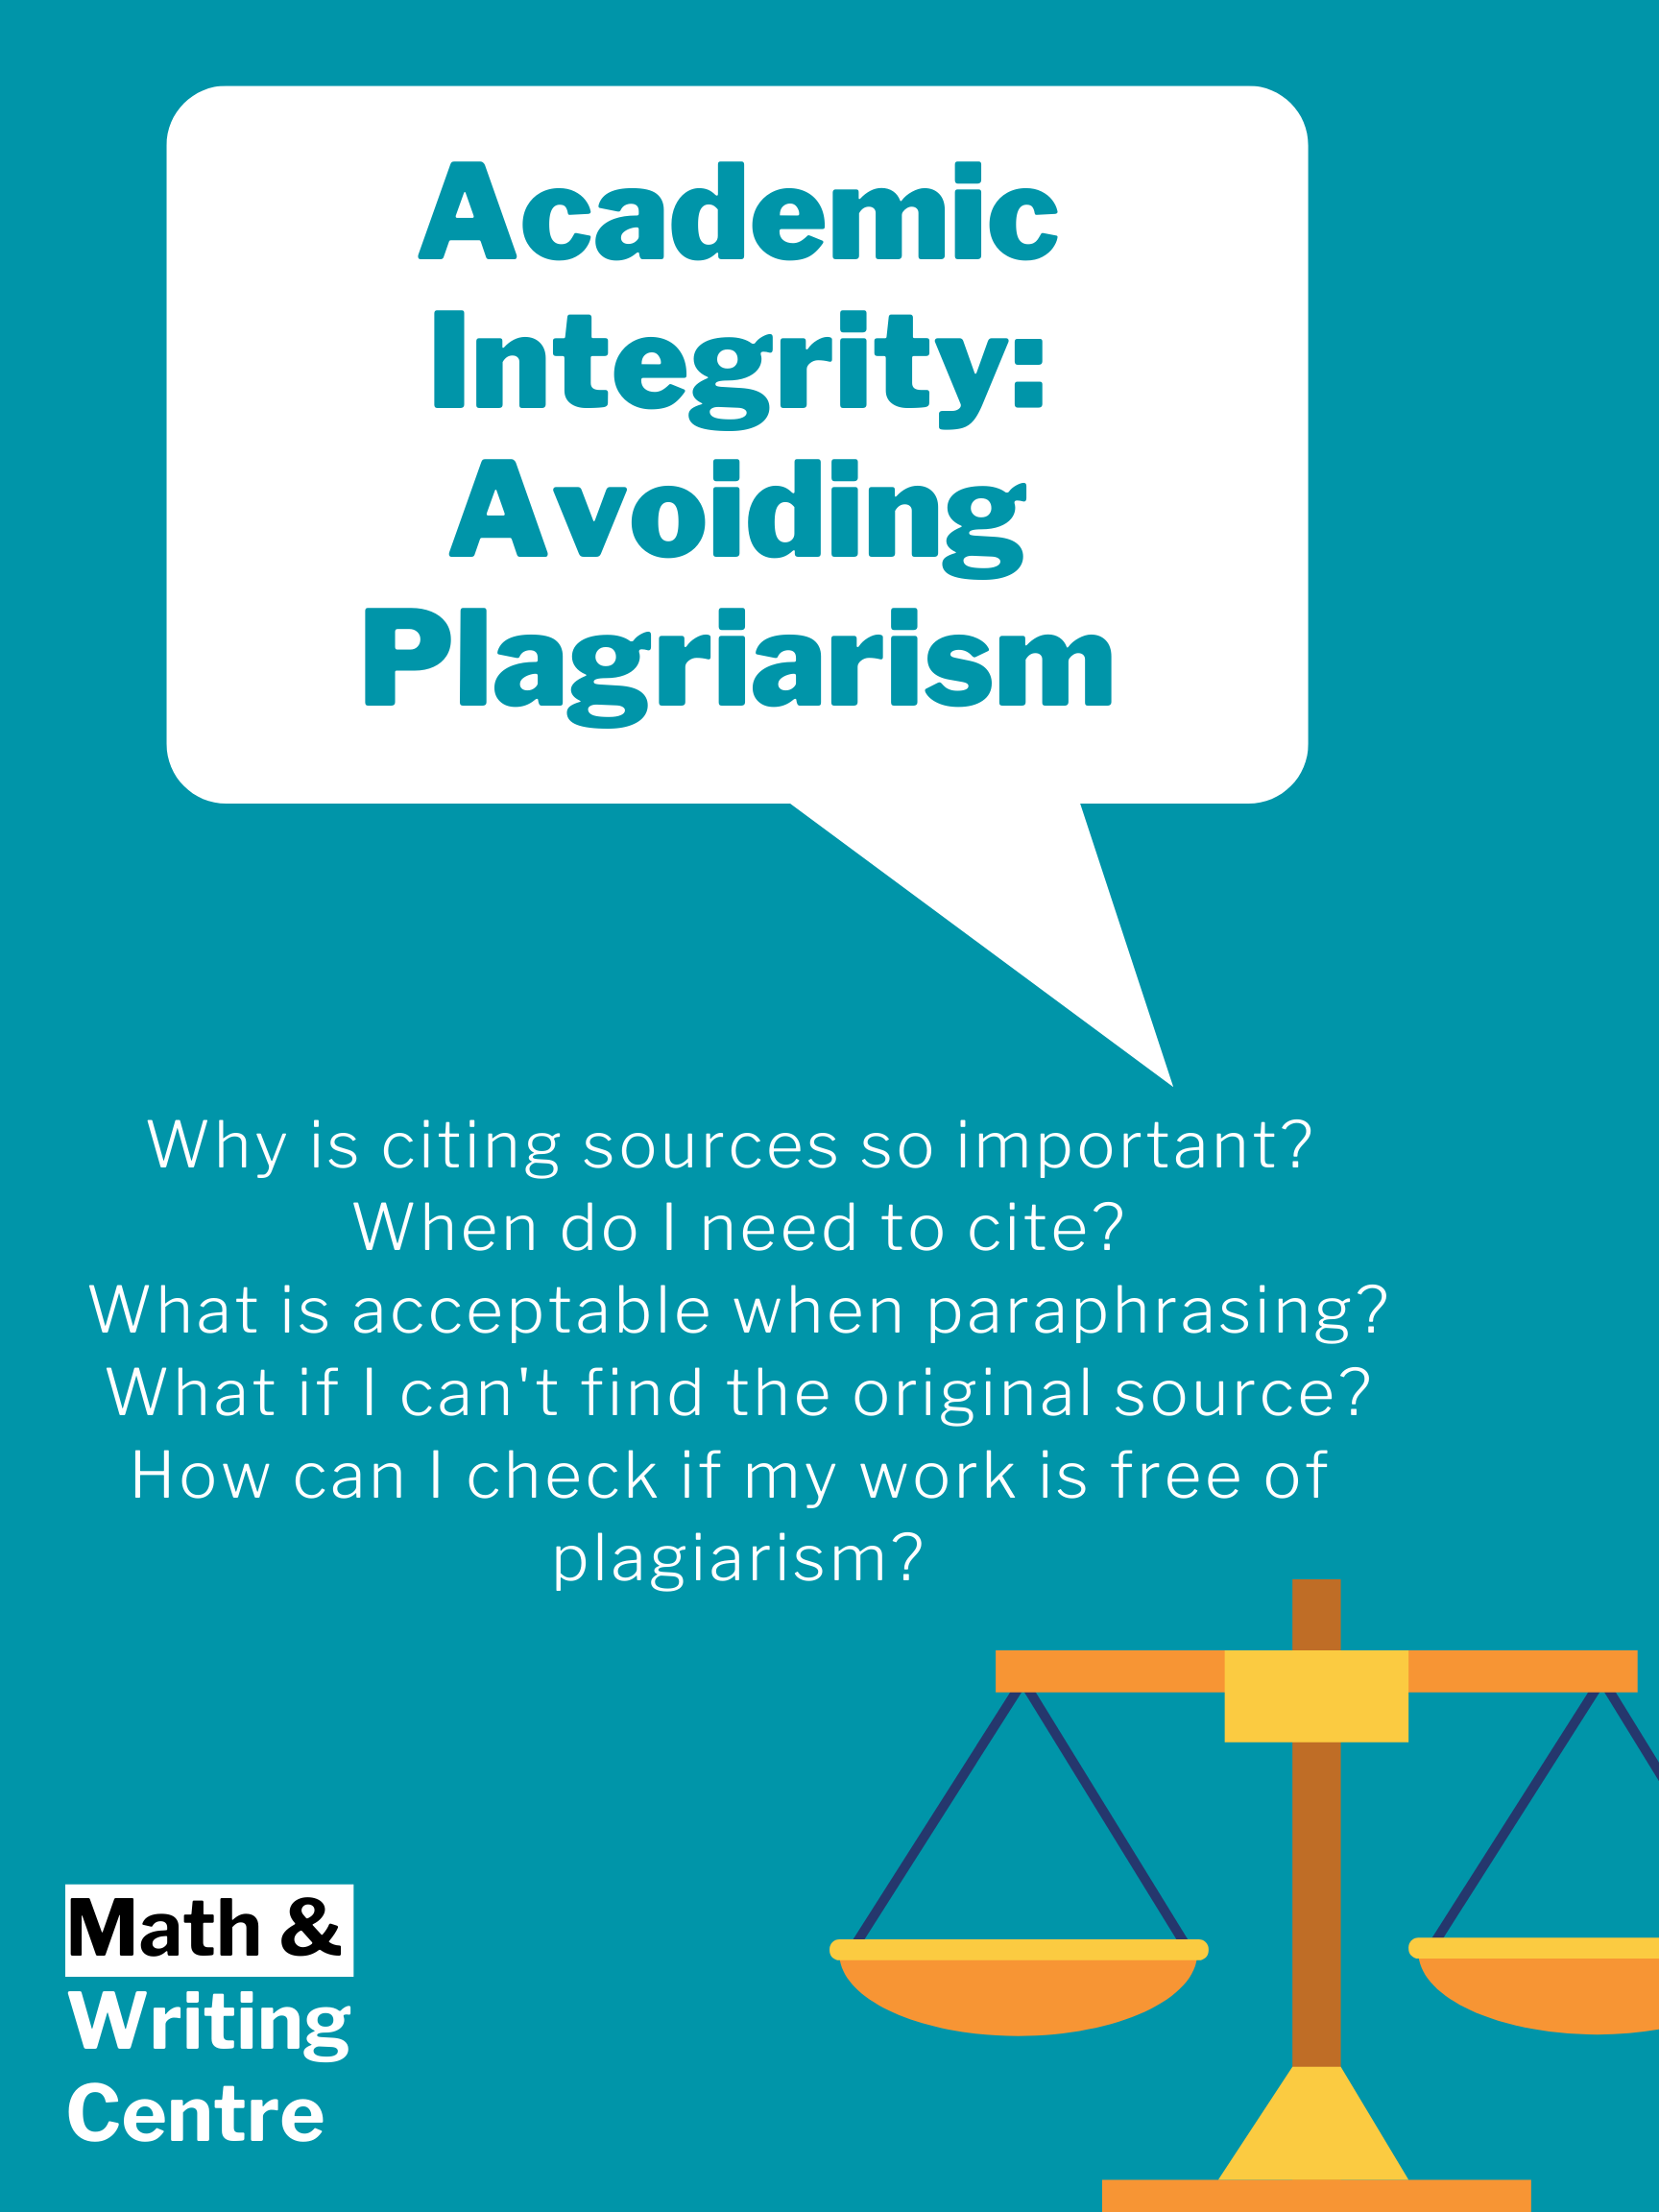 "Academic Integrity: Avoiding Plagiarism" in a speech bubble